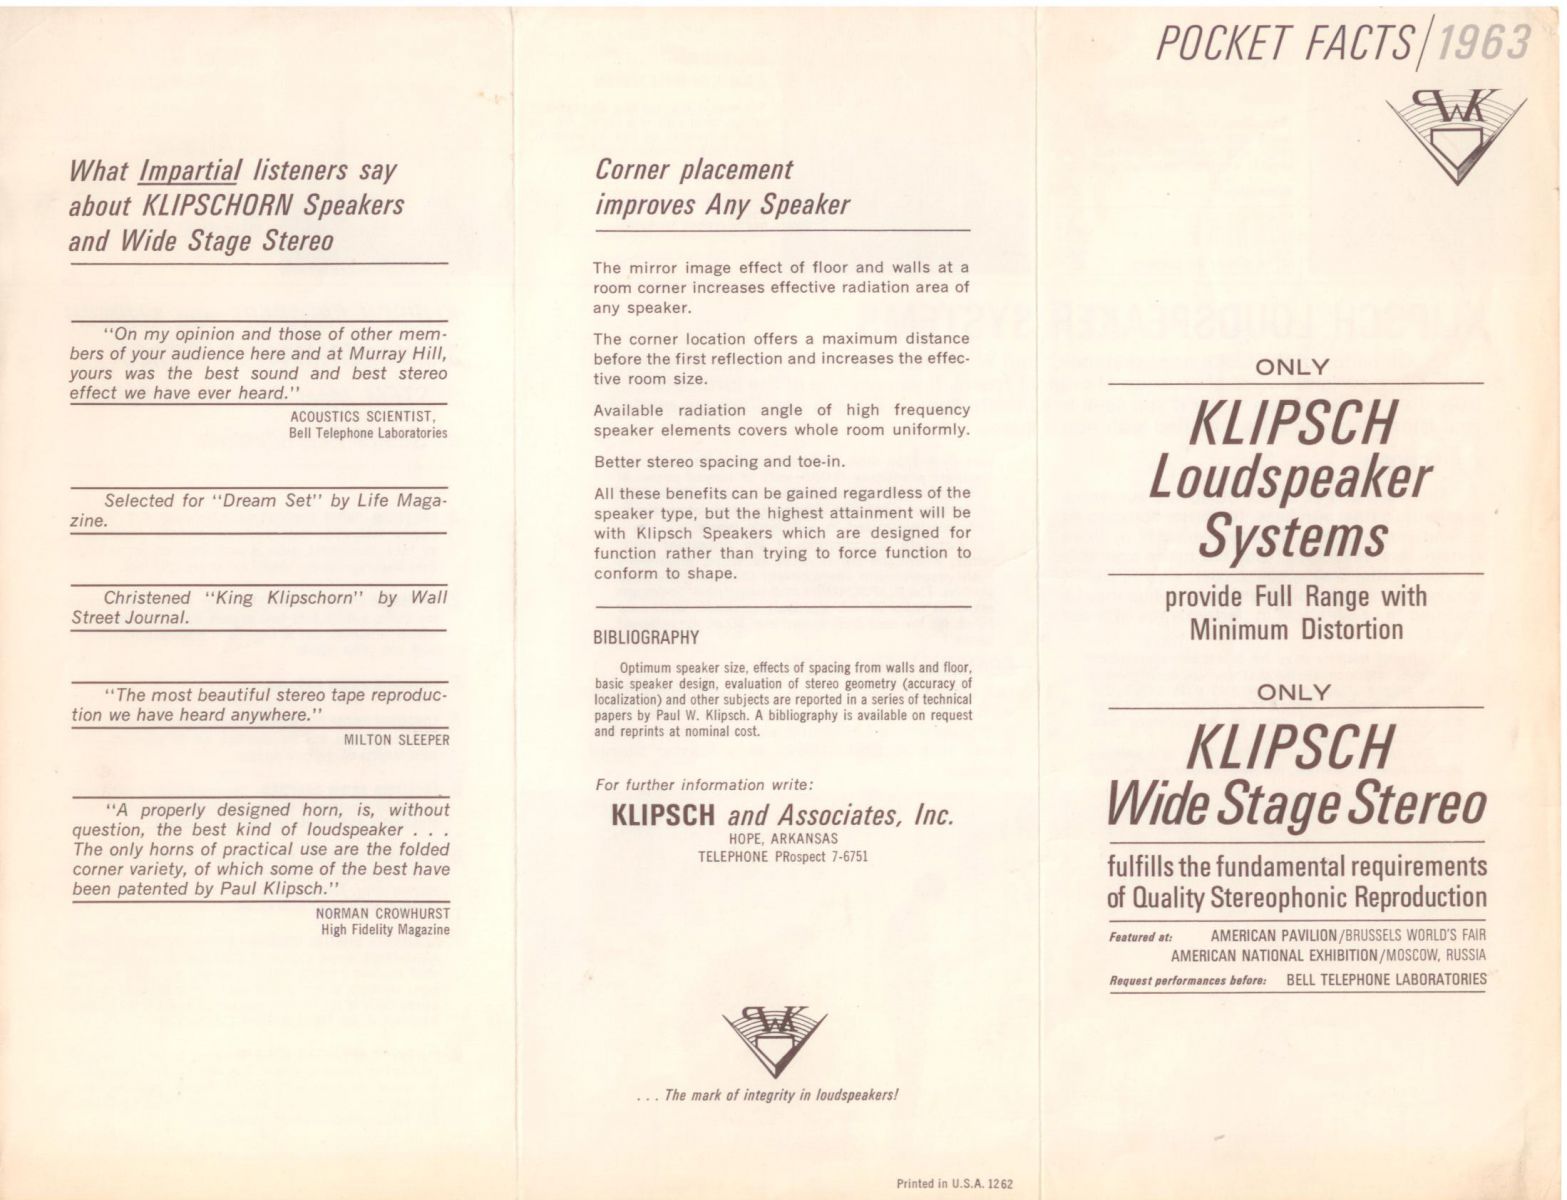 P1 Pocket Facts 1963